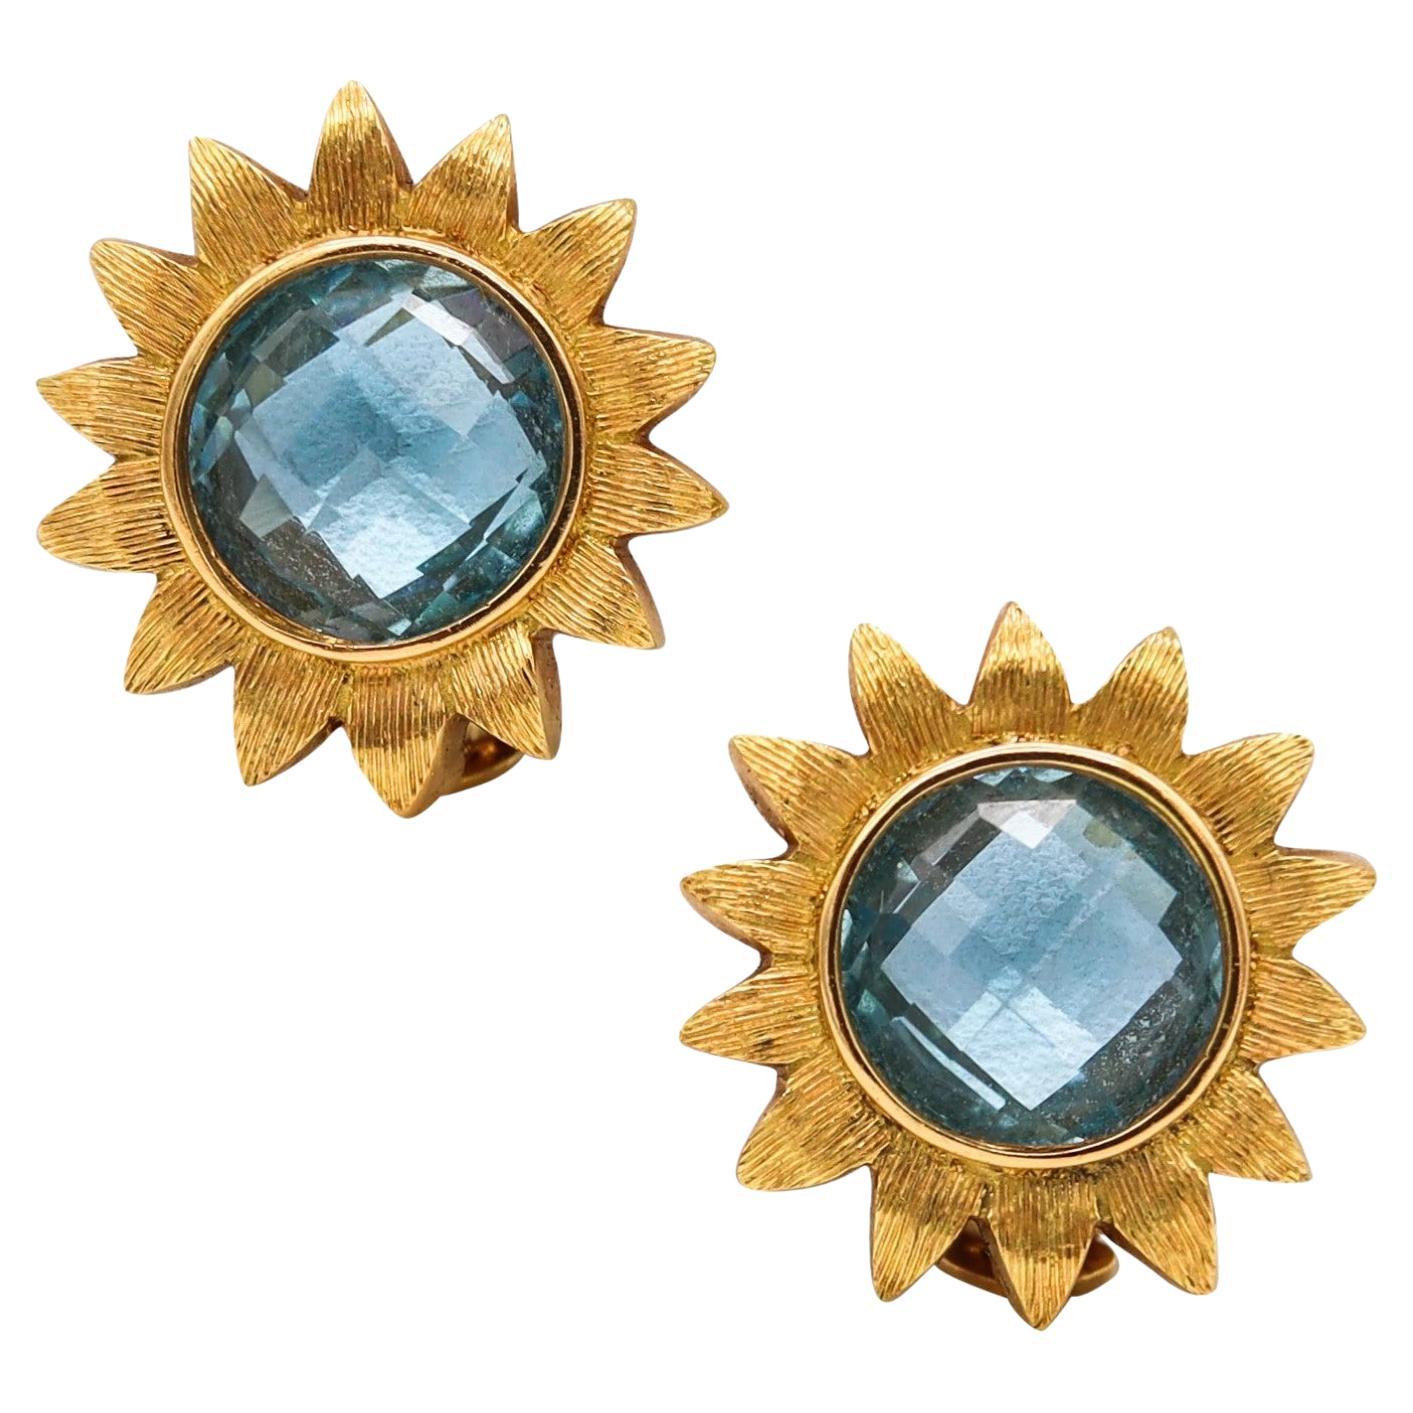 Robert Bruce Bielka Tropical Sunflower Clips-Earrings Solid 18Kt Gold Blue Topaz